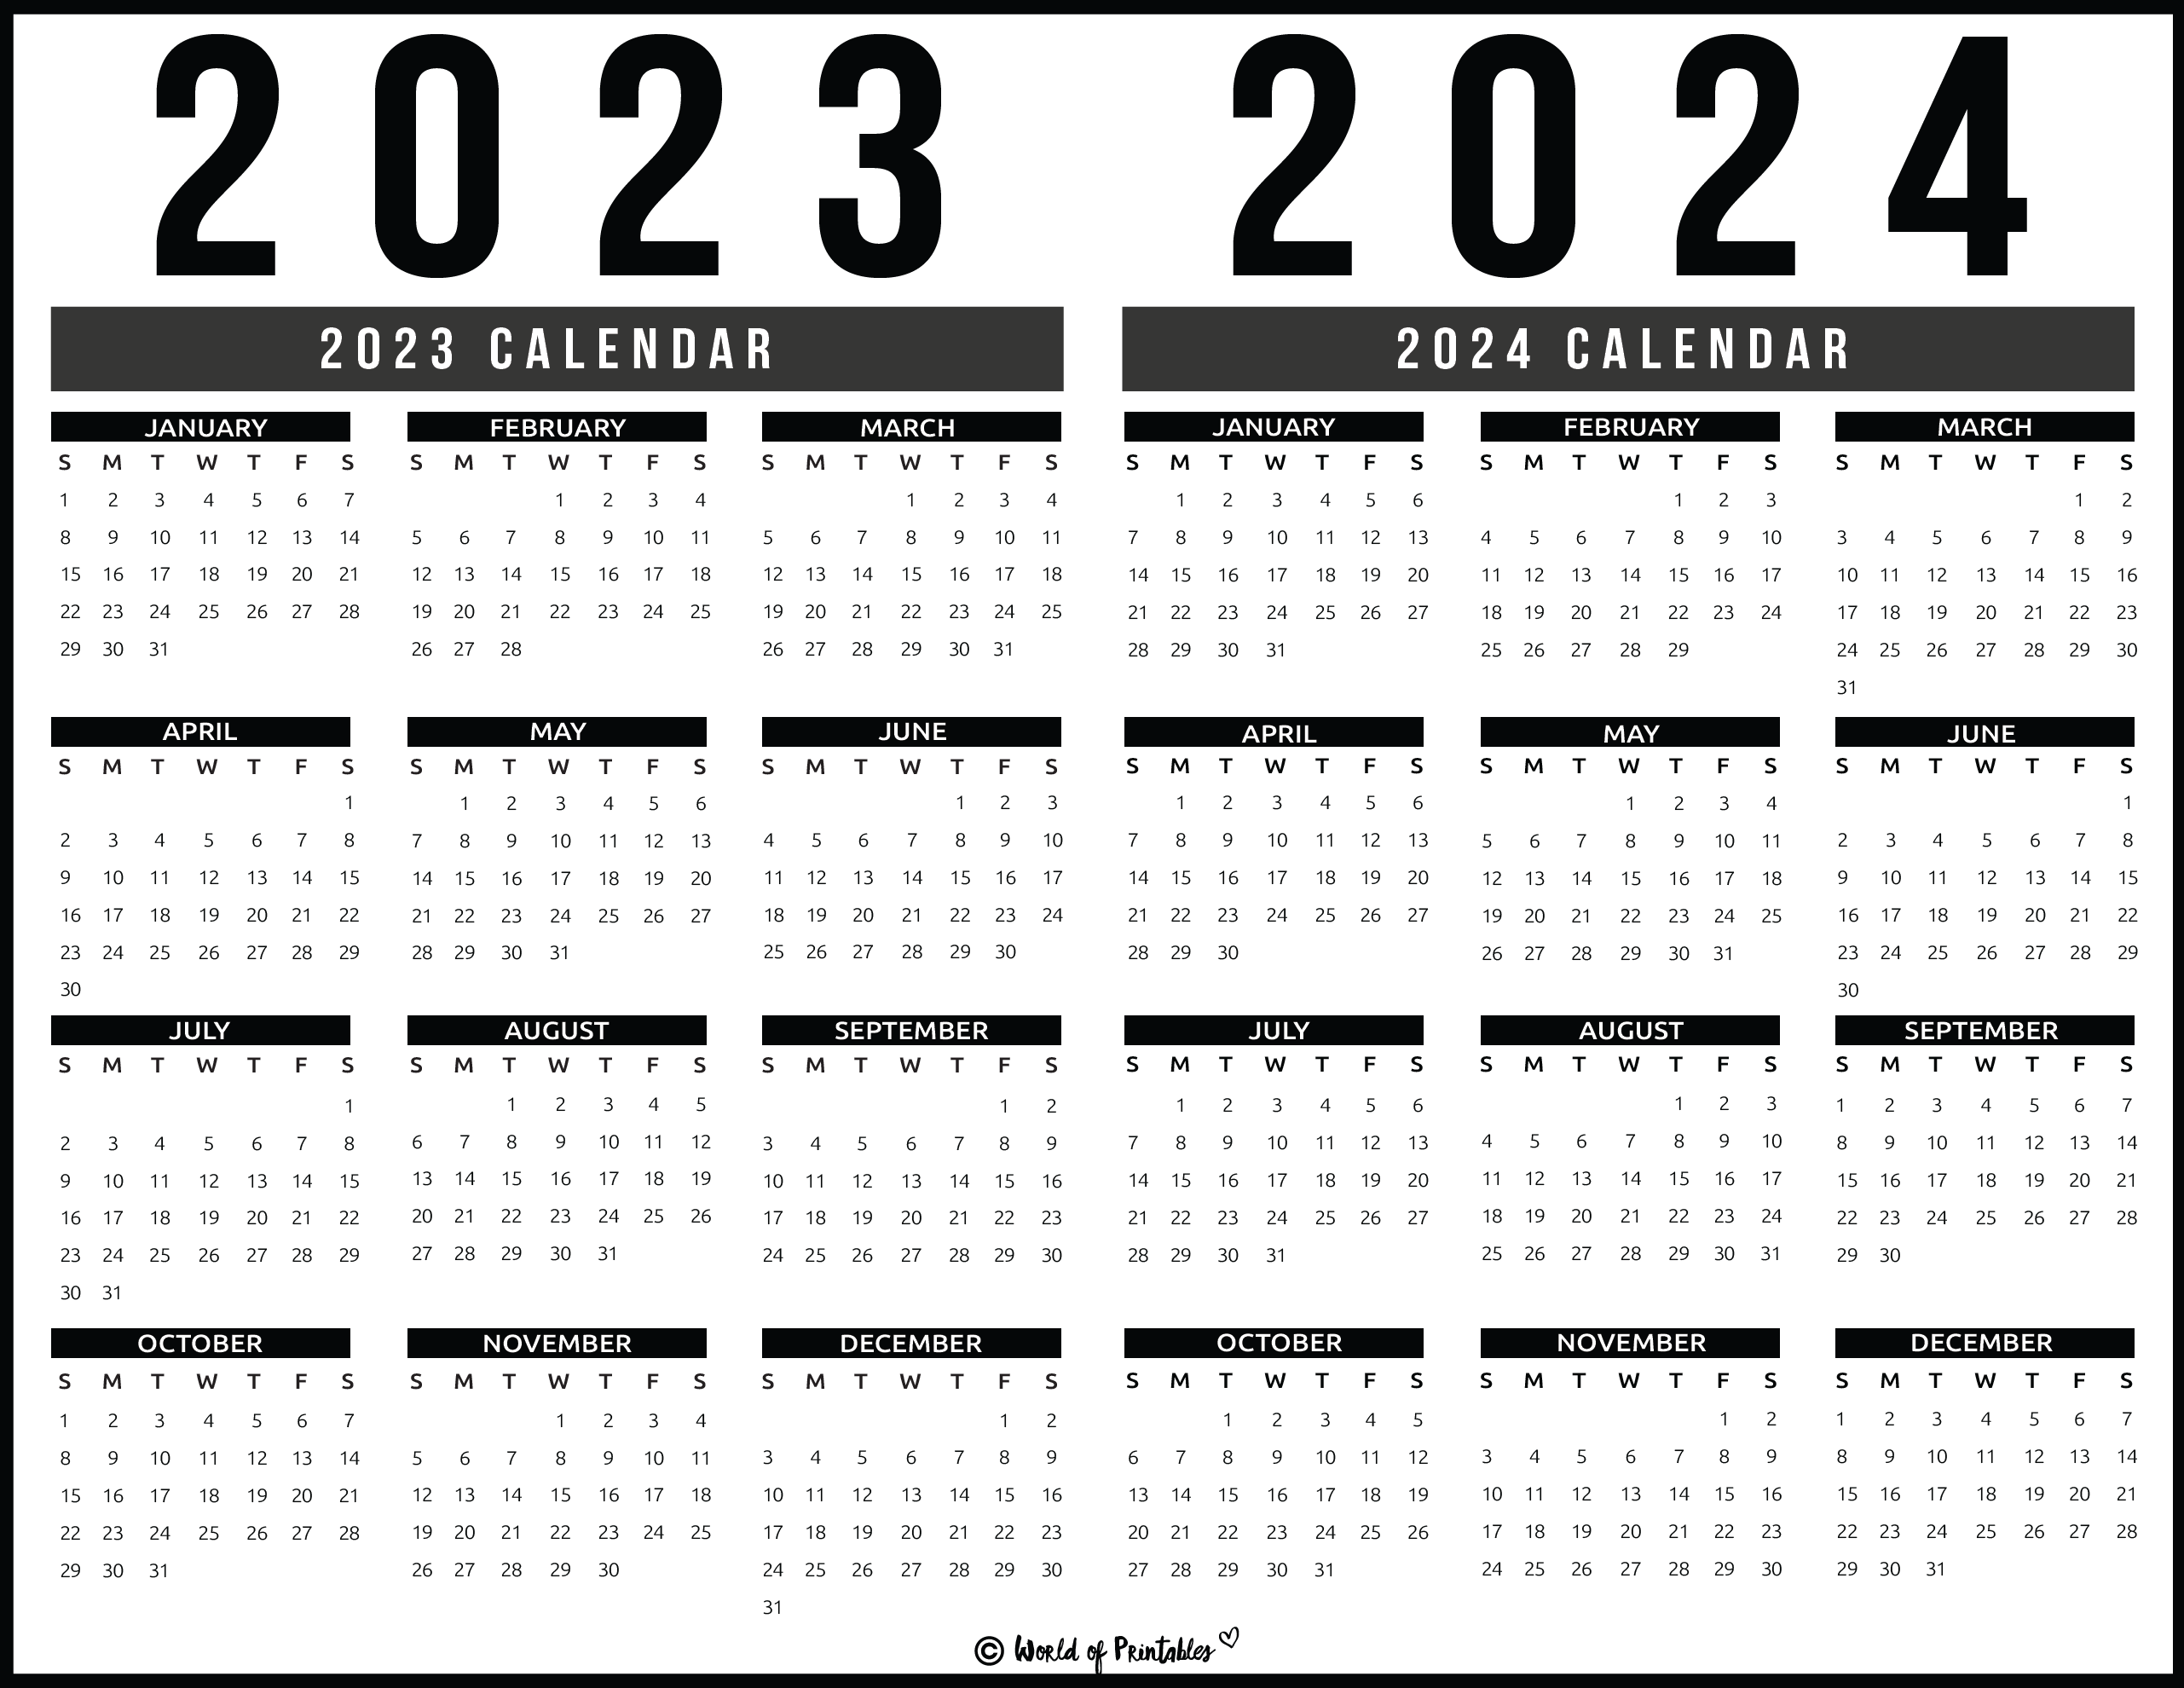 2023 2024 Calendar Free Printables - World Of Printables for 2023-2024 Calendar With Holidays Printable